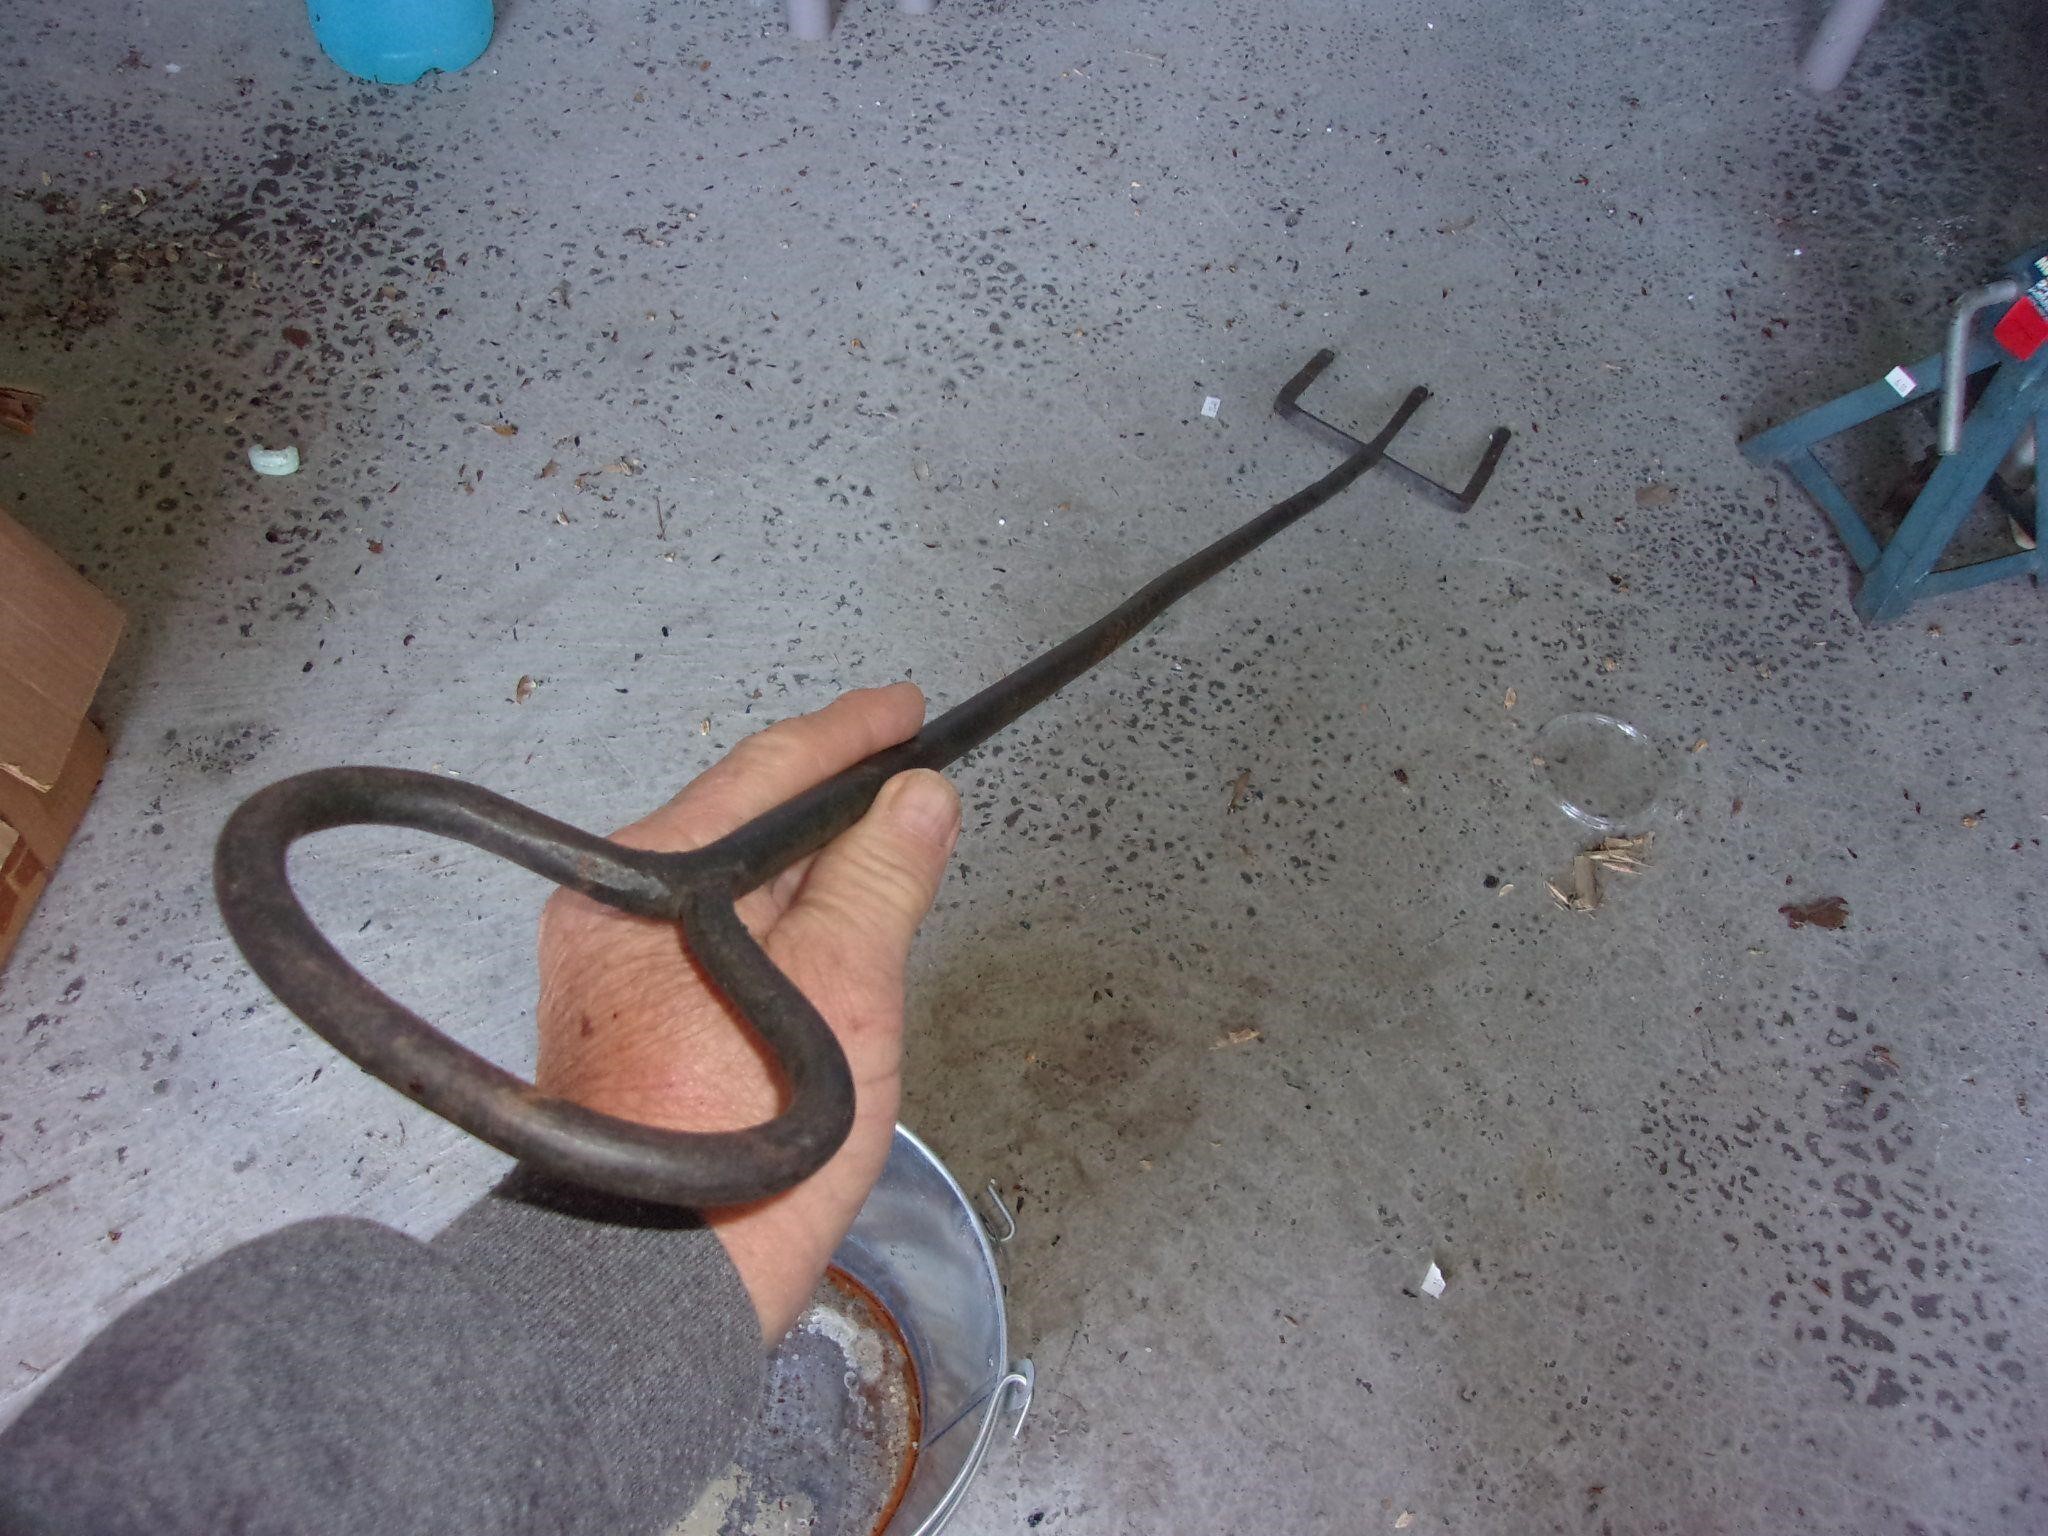 hand made blacksmith fork 4' ?